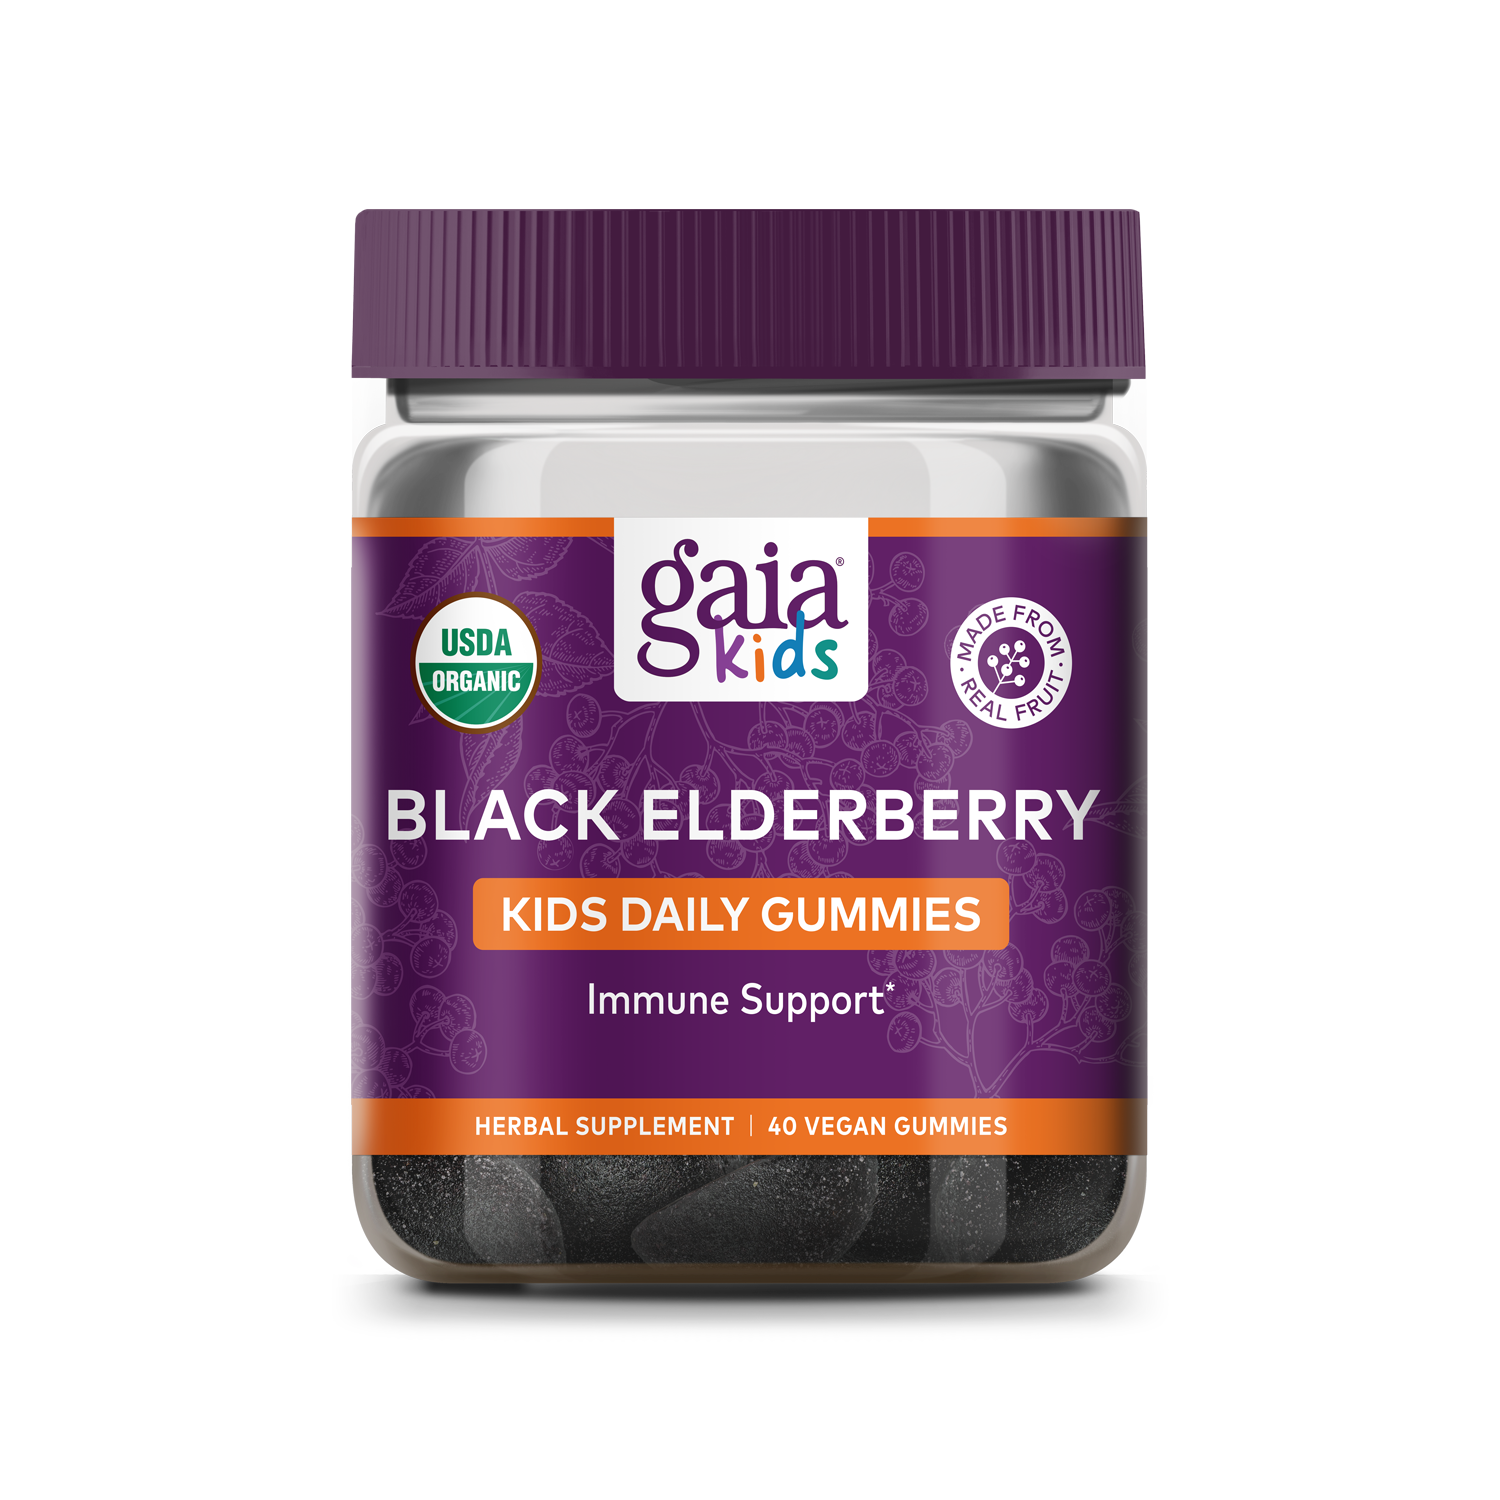 Gaia Herbs Gaia Kids Black Elderberry Kids Daily Gummies, 40 Vegan Gummies